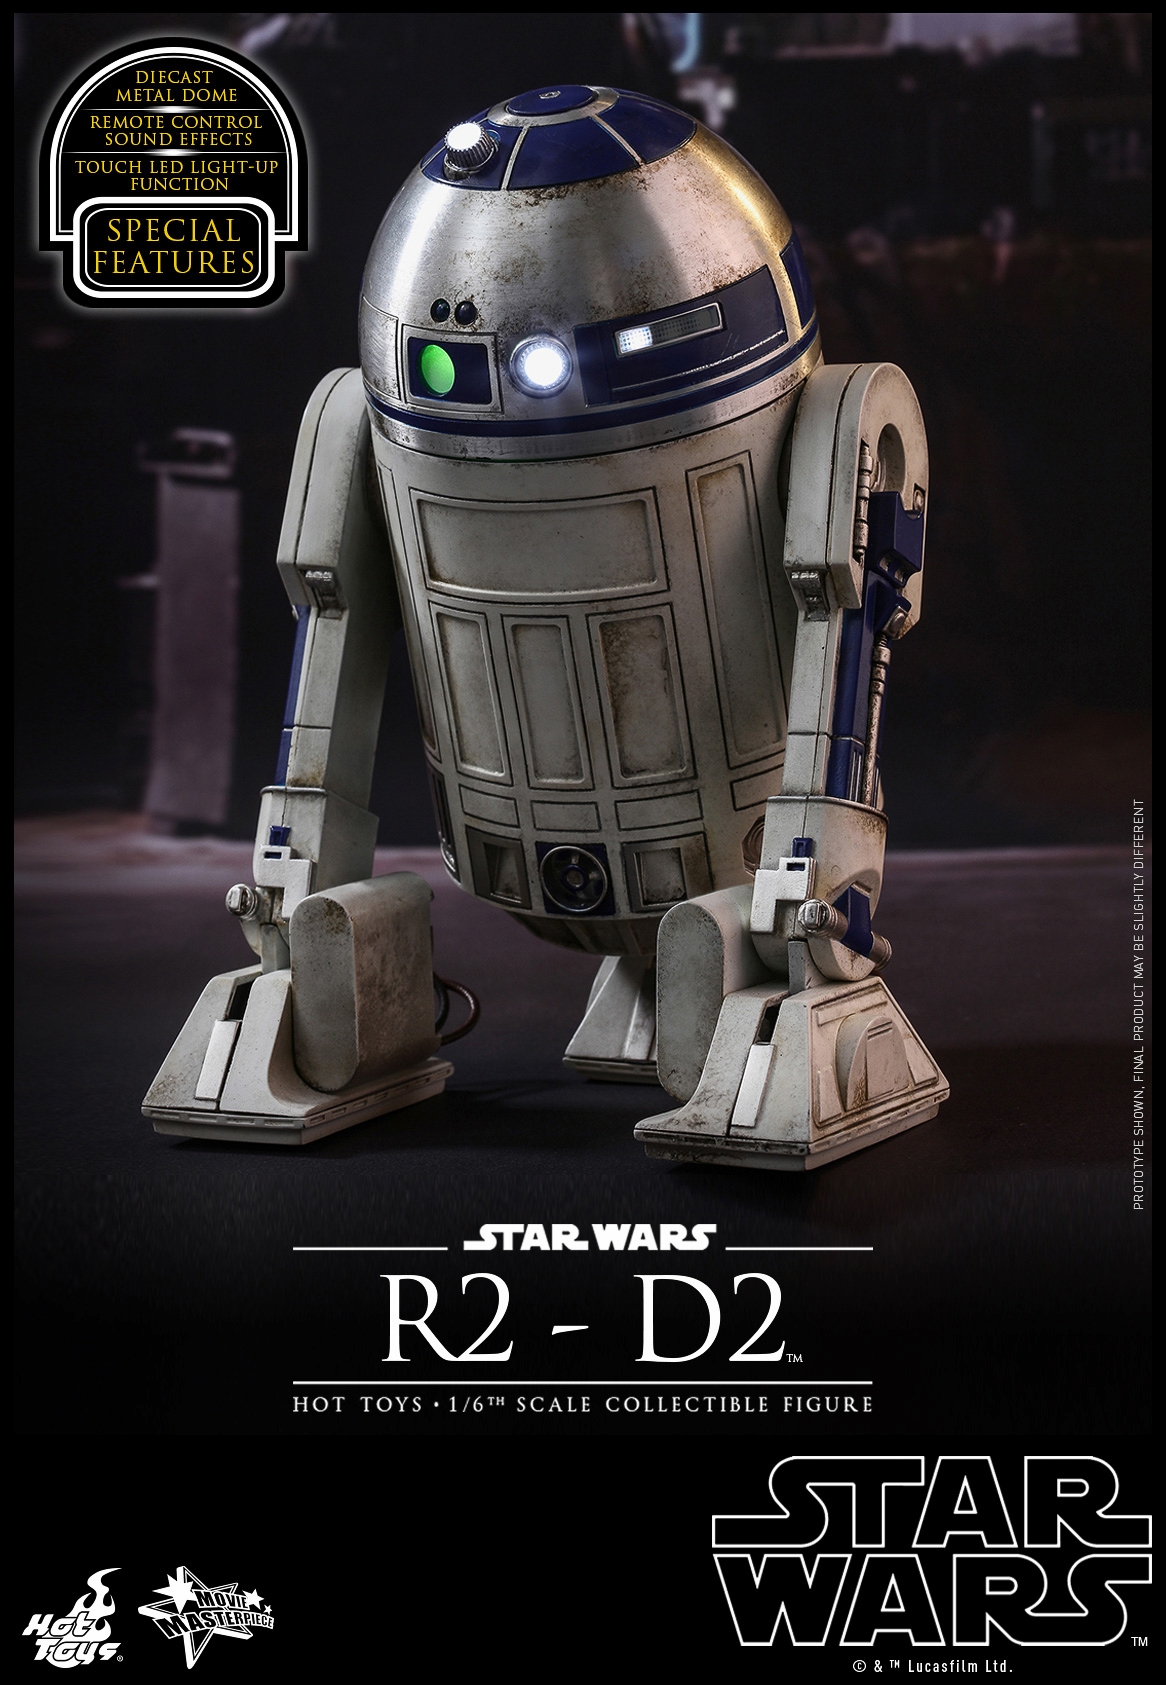 Hot-Toys-MMS408-Star-Wars-The-Force-Awakens-R2-D2-005.jpg